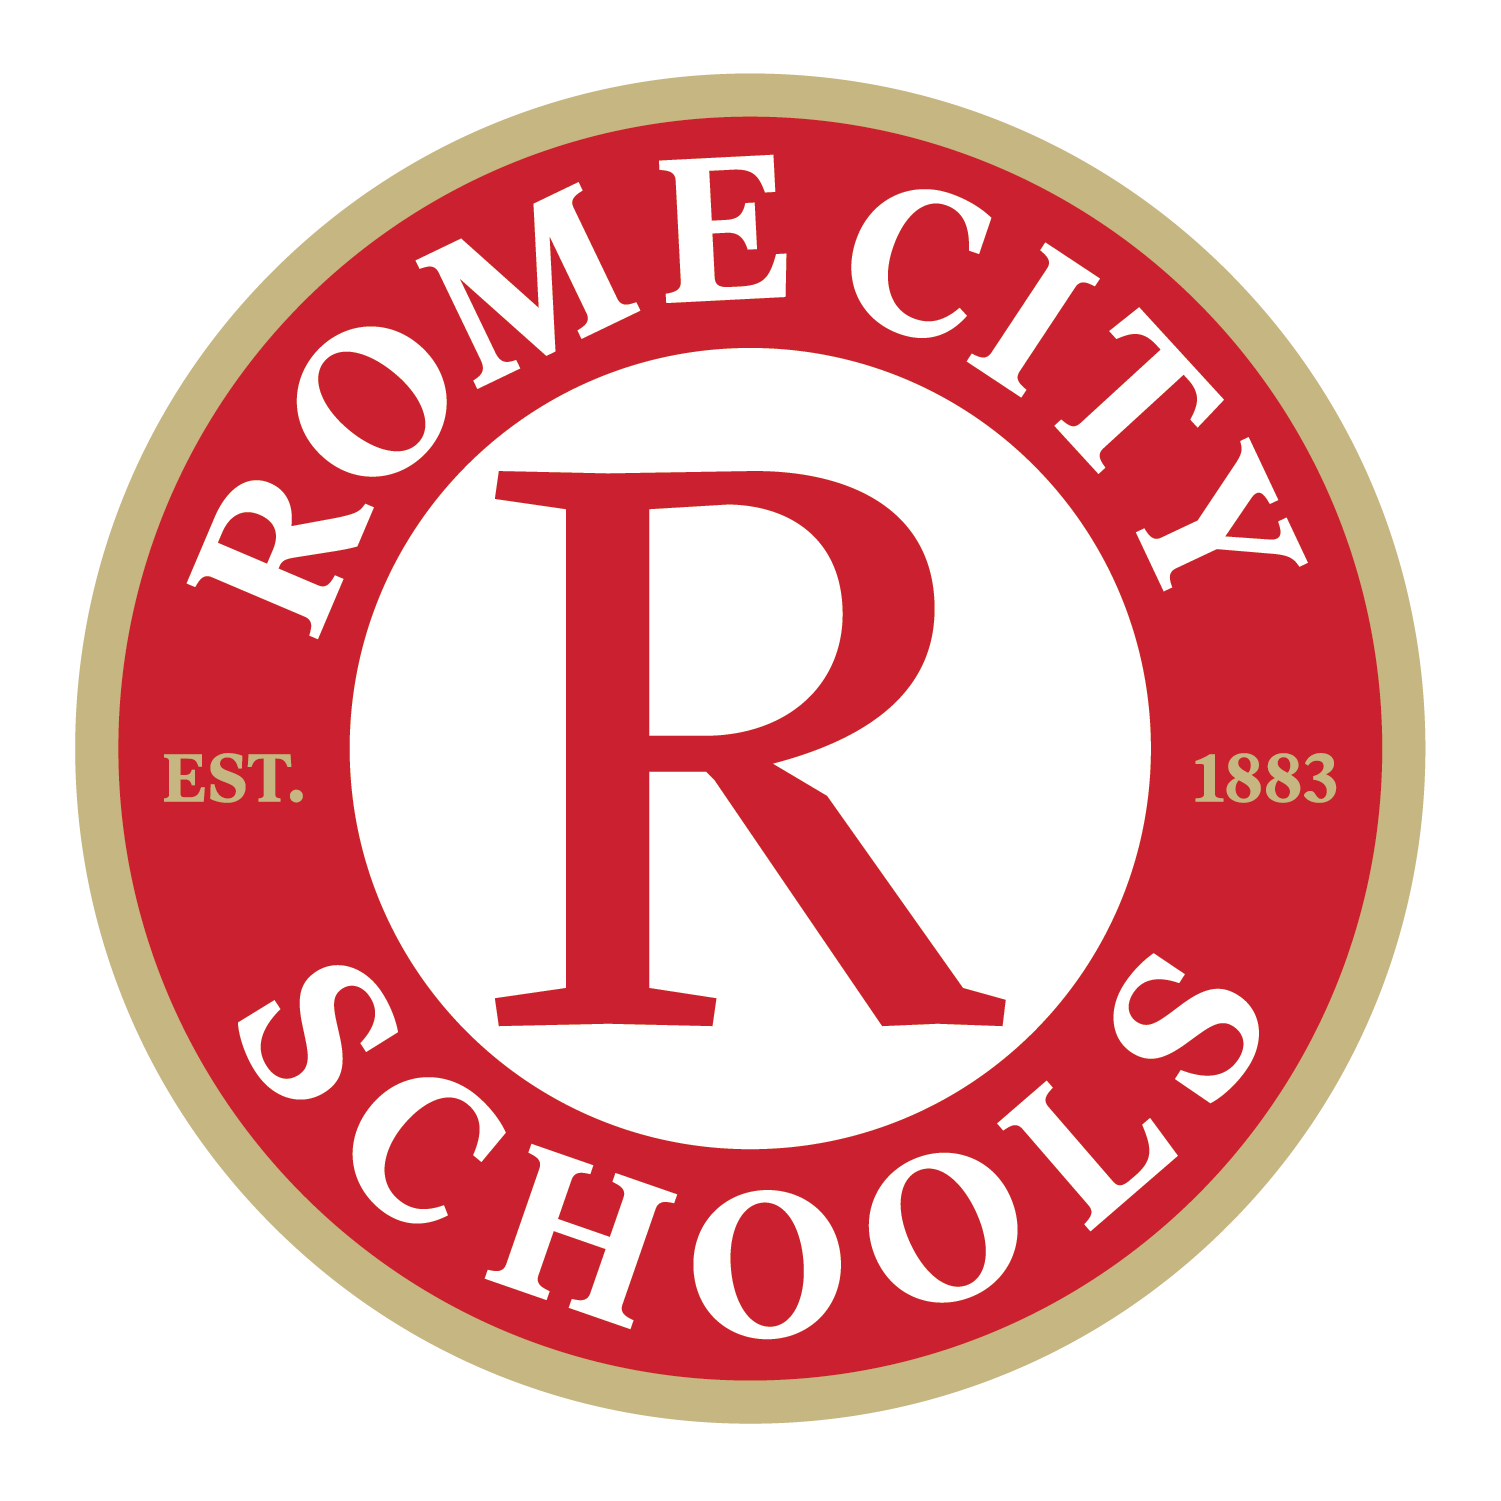 R est. Rome Style logo. Rome City logo.